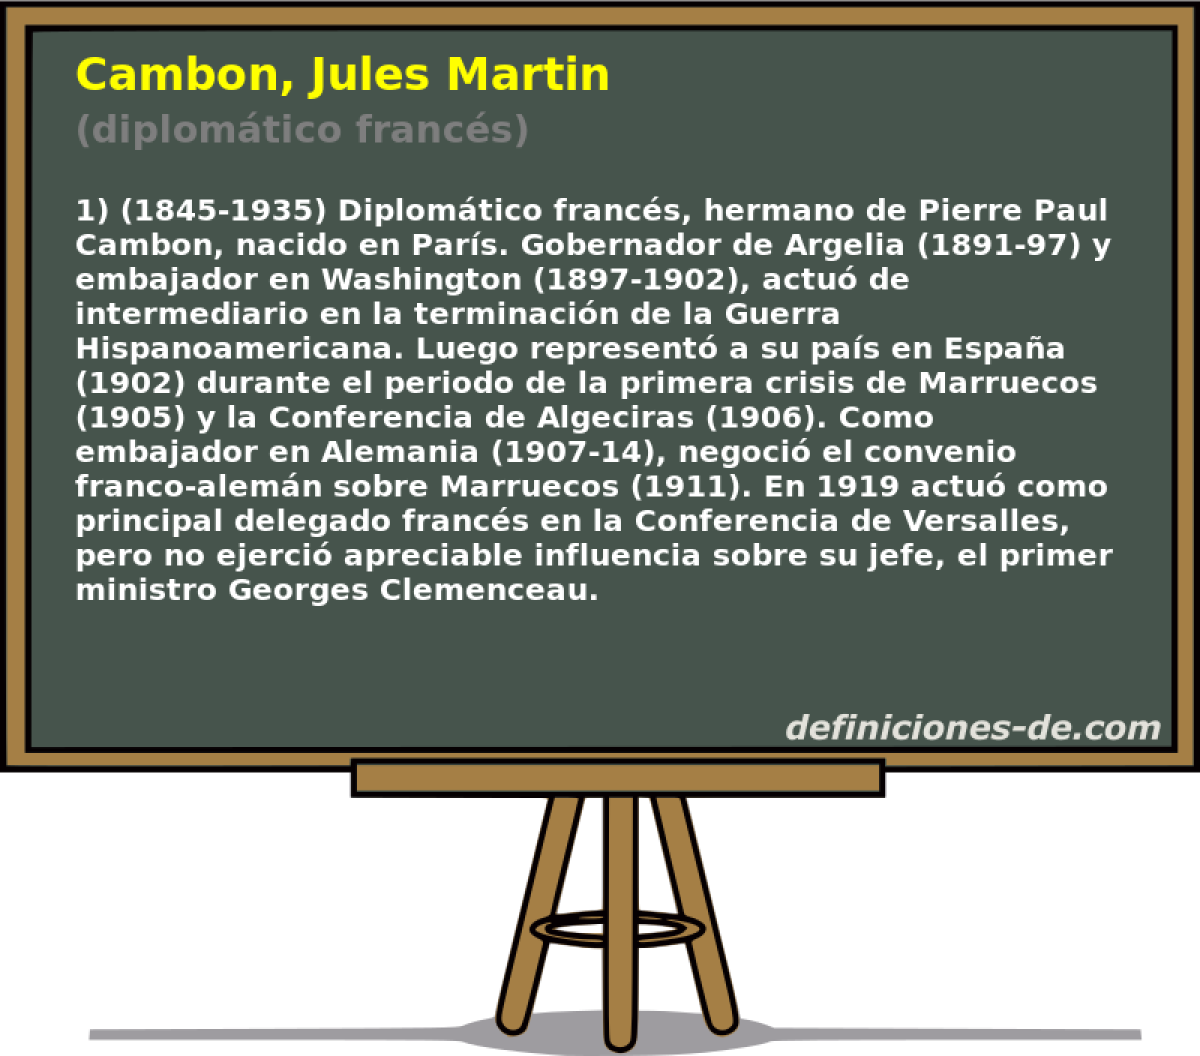 Cambon, Jules Martin (diplomtico francs)